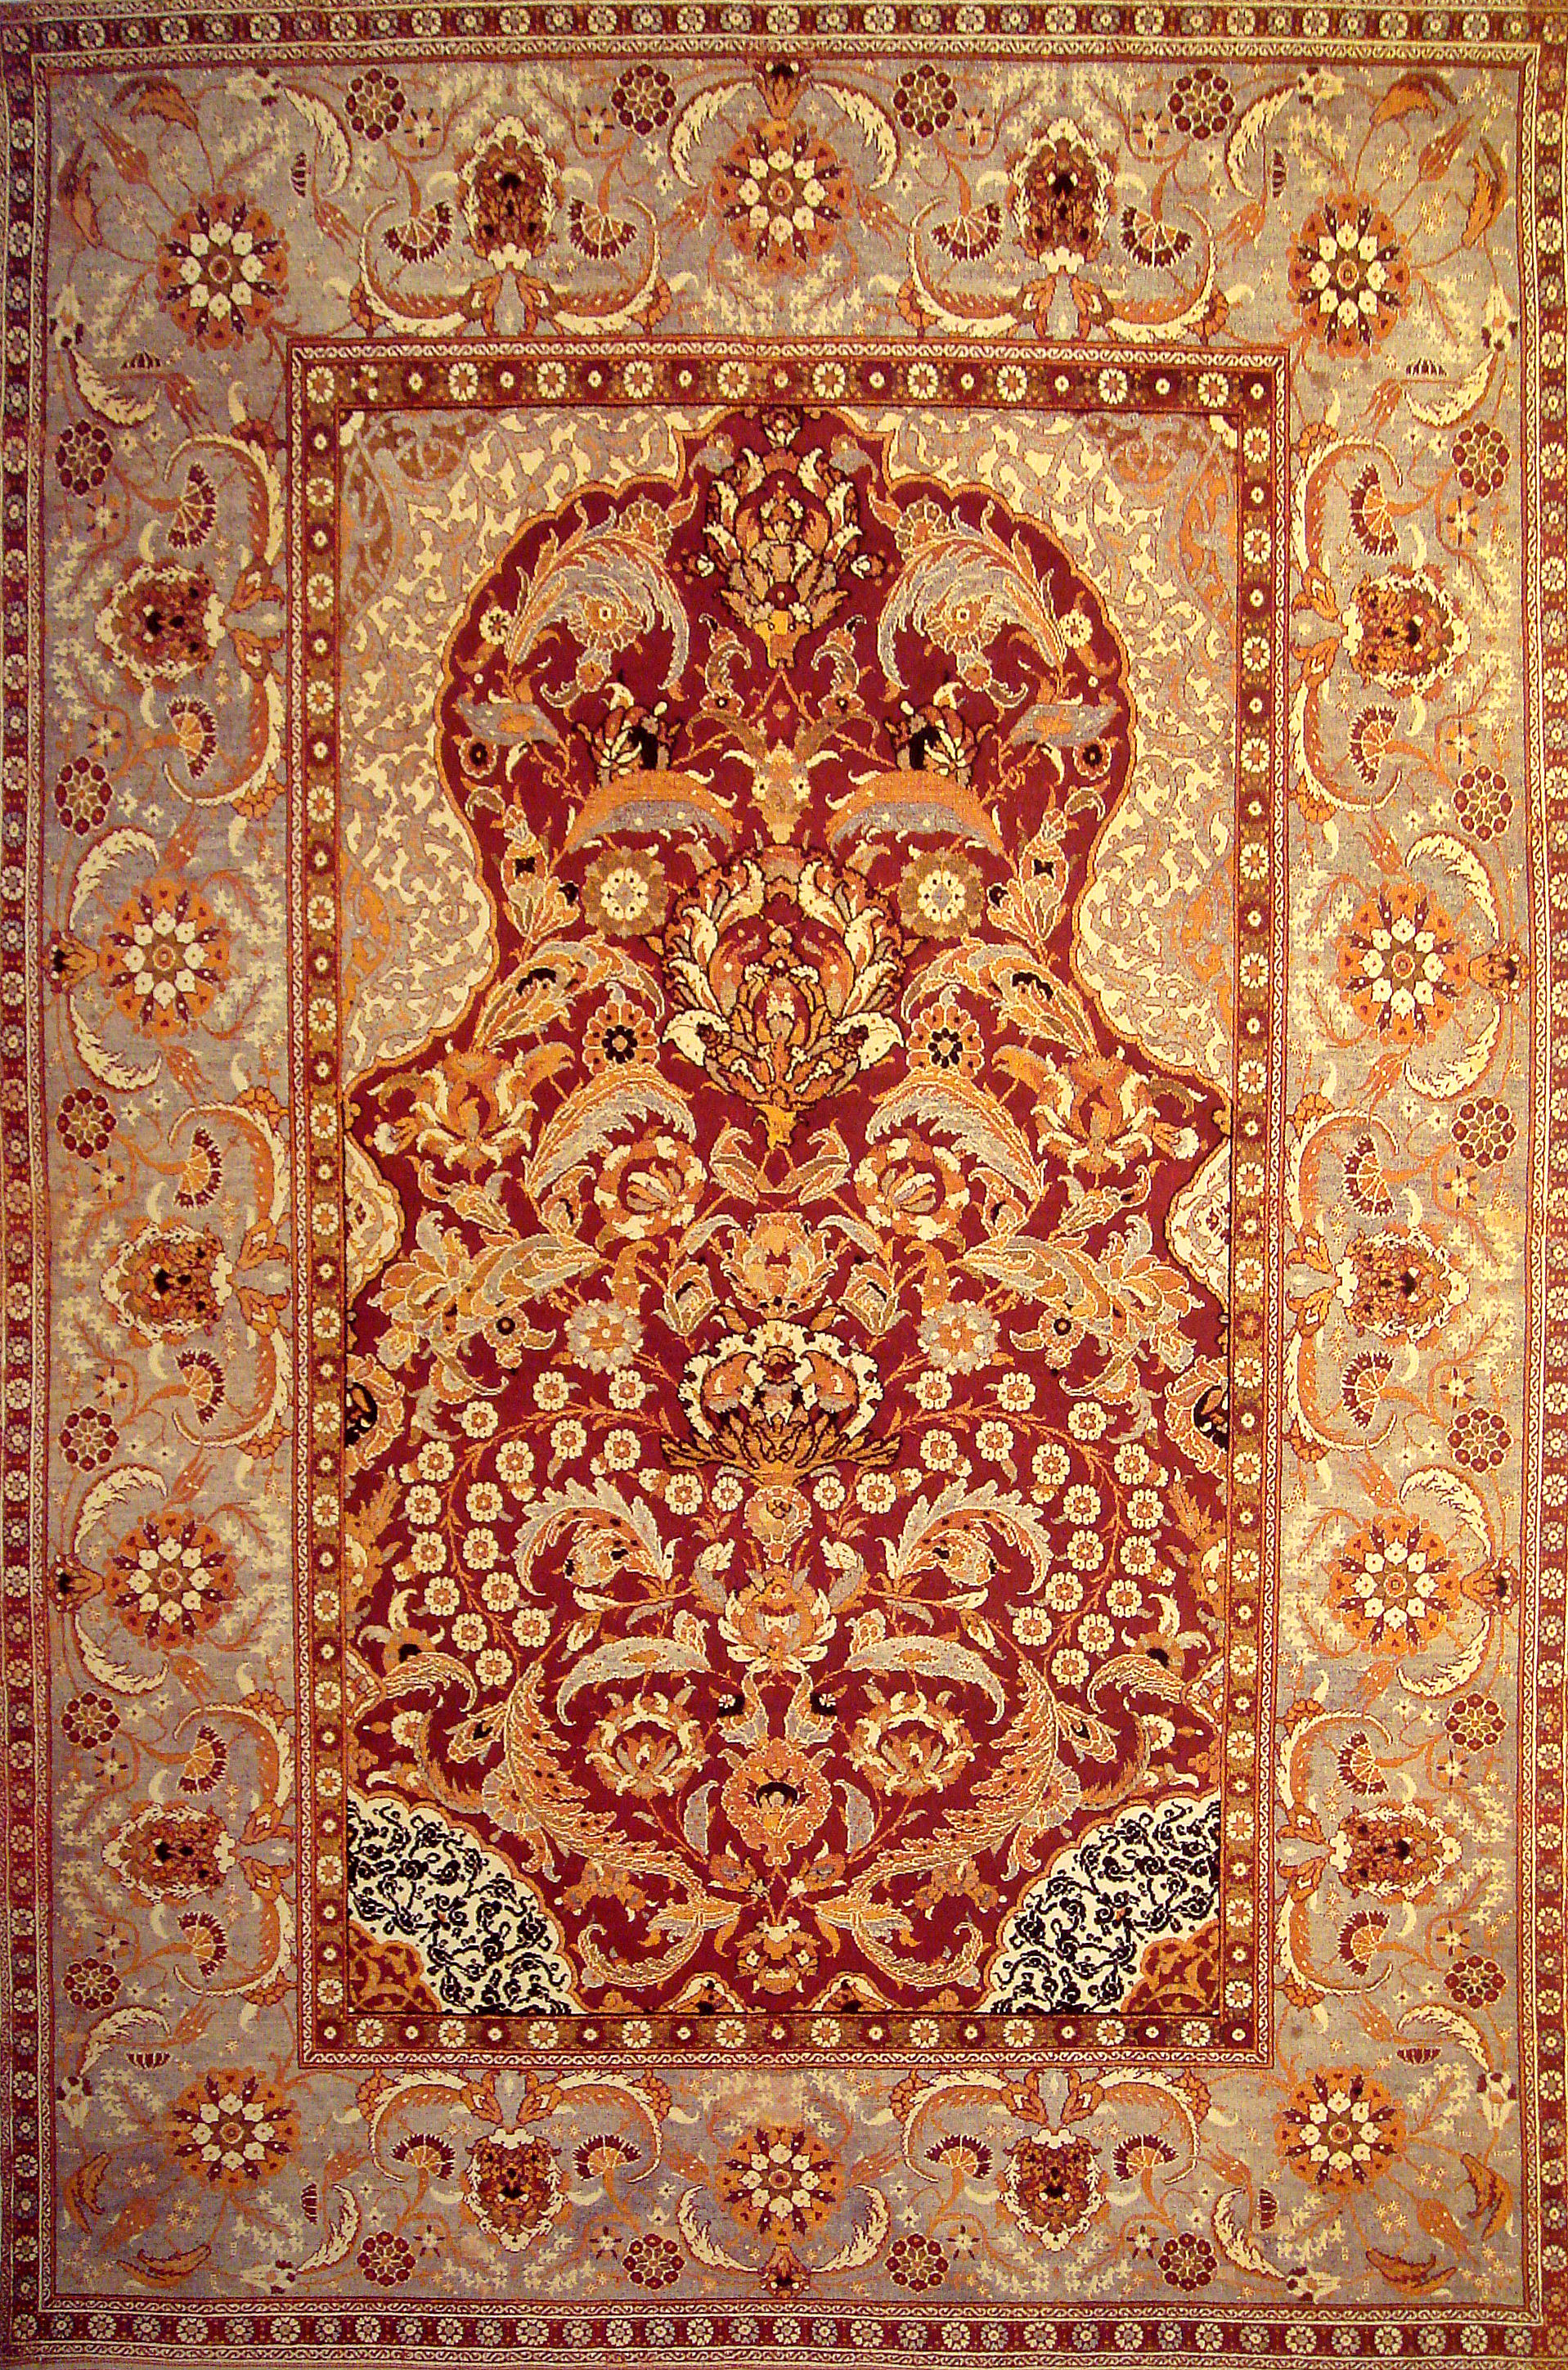 Ottoman Court carpet late 16th century Egypt or Turkey